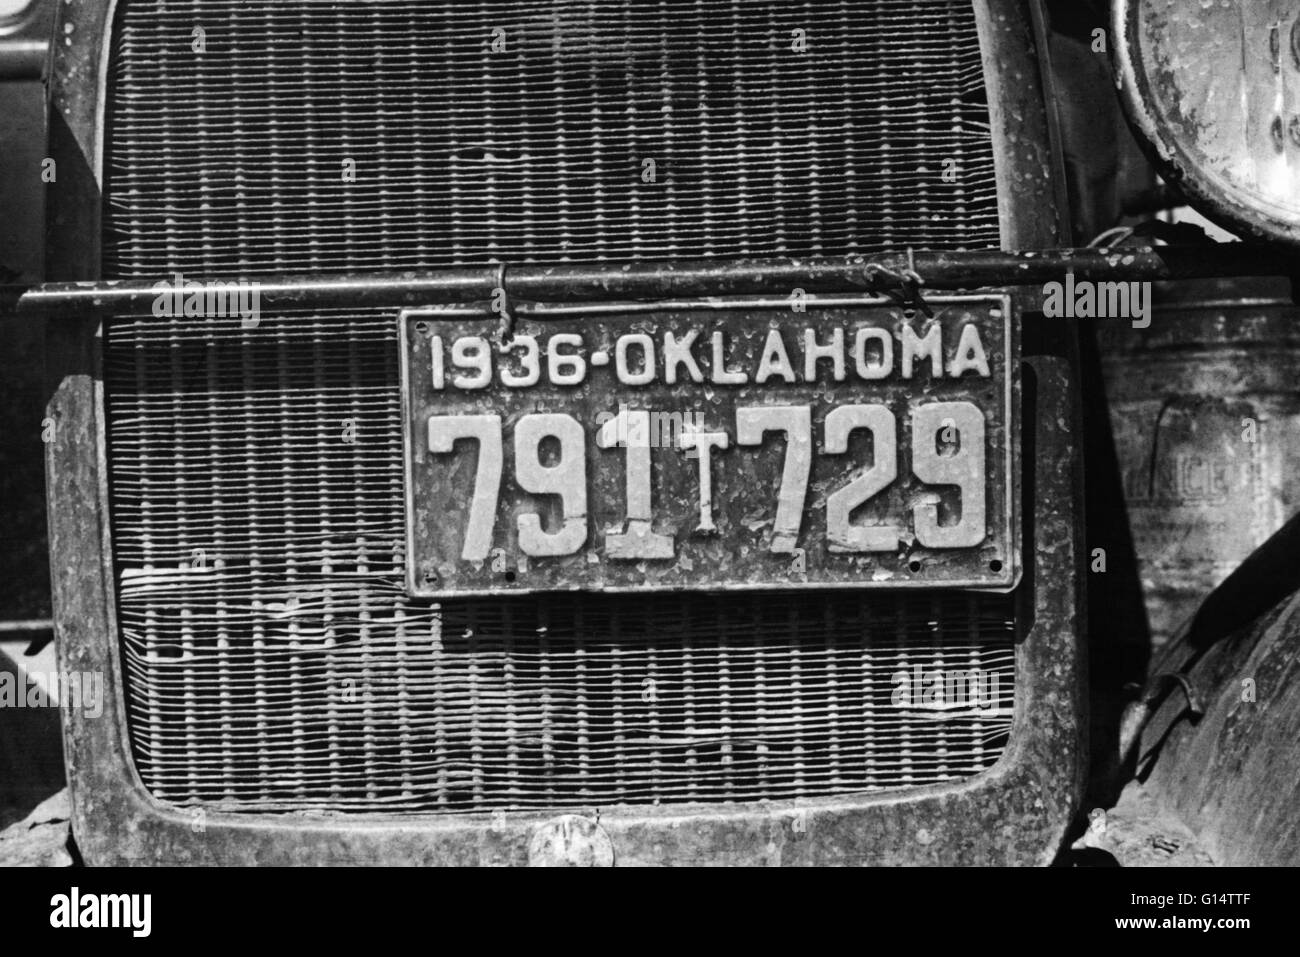 Radiator and license of Oklahoma cotton picker's car. San Joaquin Valley, near Fresno, California. November 1936. Photographed by Dorothea Lange. Stock Photo